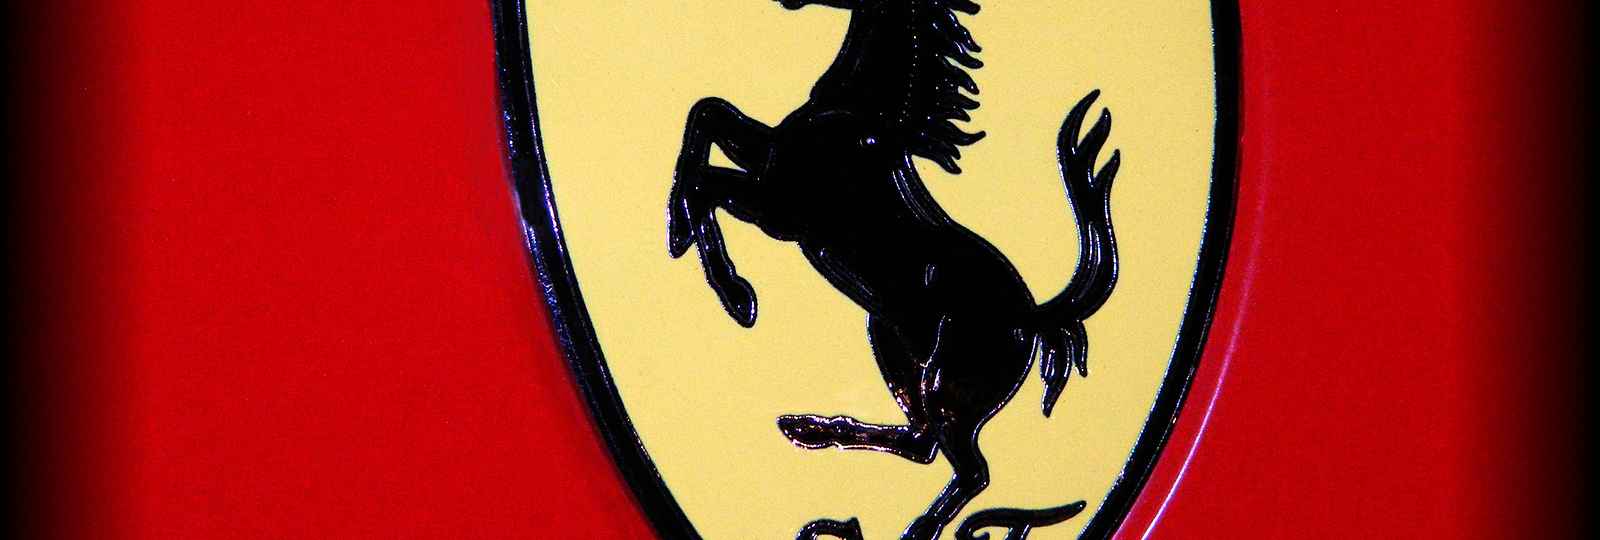 Tour of Maranello, to Discover the Ferrari Factory